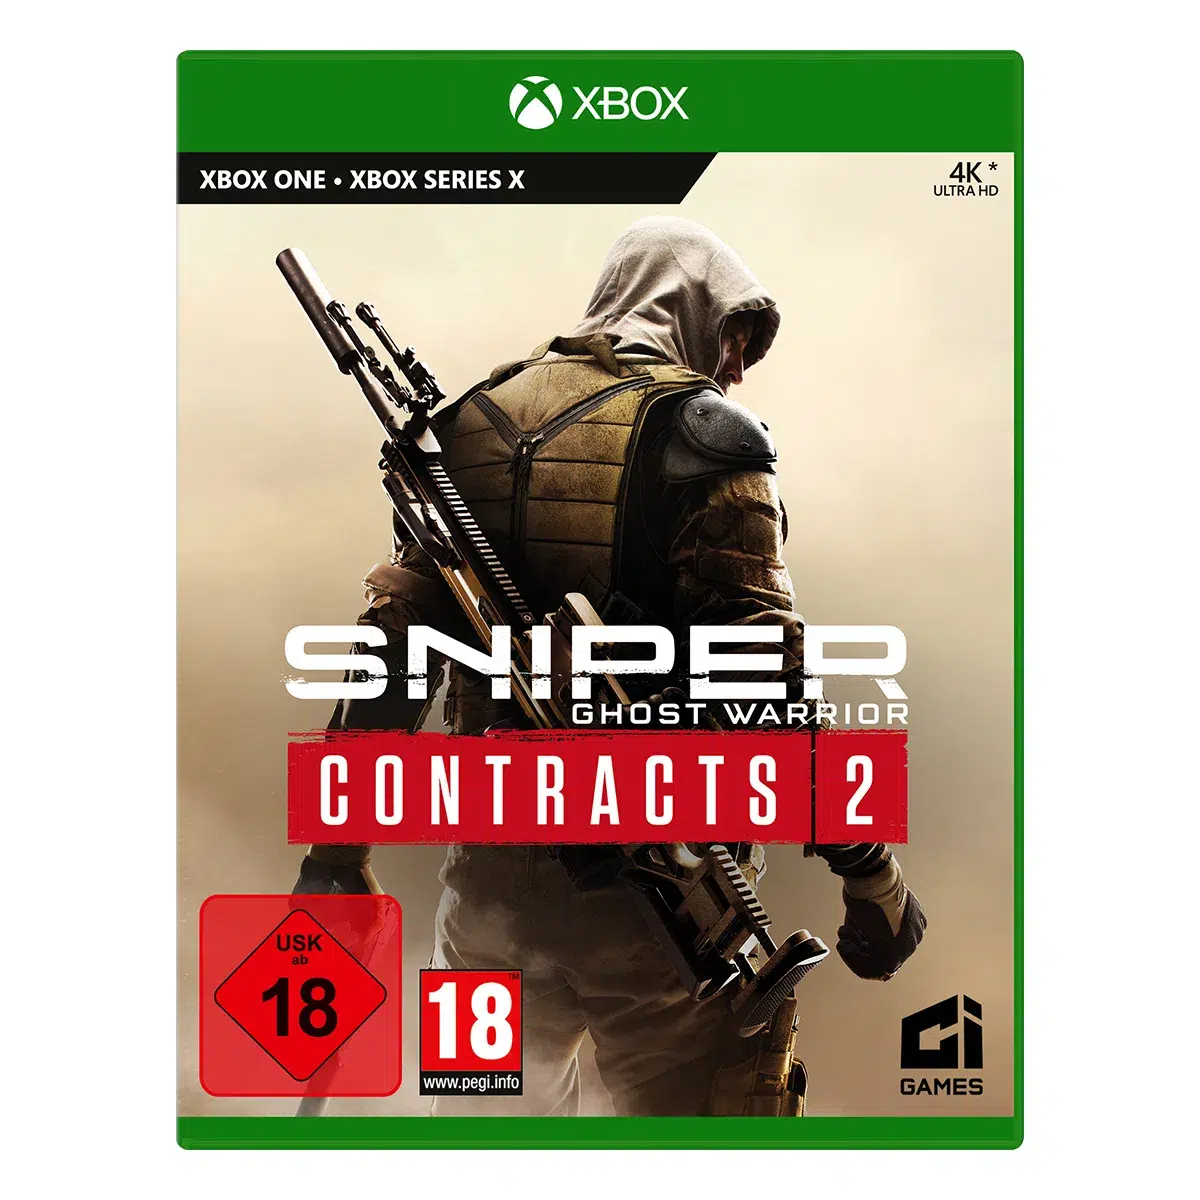 Sniper Ghost Warrior Contracts 2 - XONE